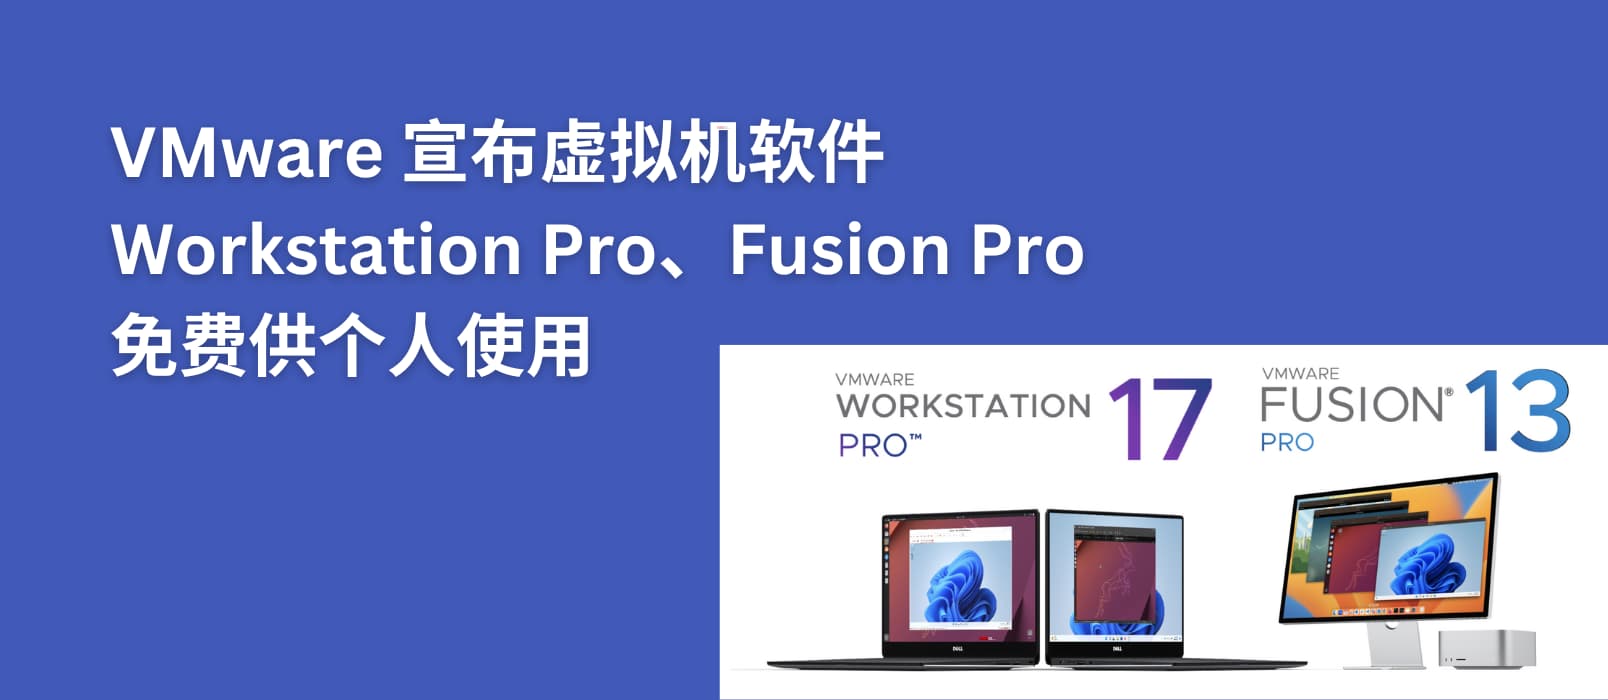 VMware 虚拟机产品 Workstation Pro 和 Fusion Pro 免费供个人使用